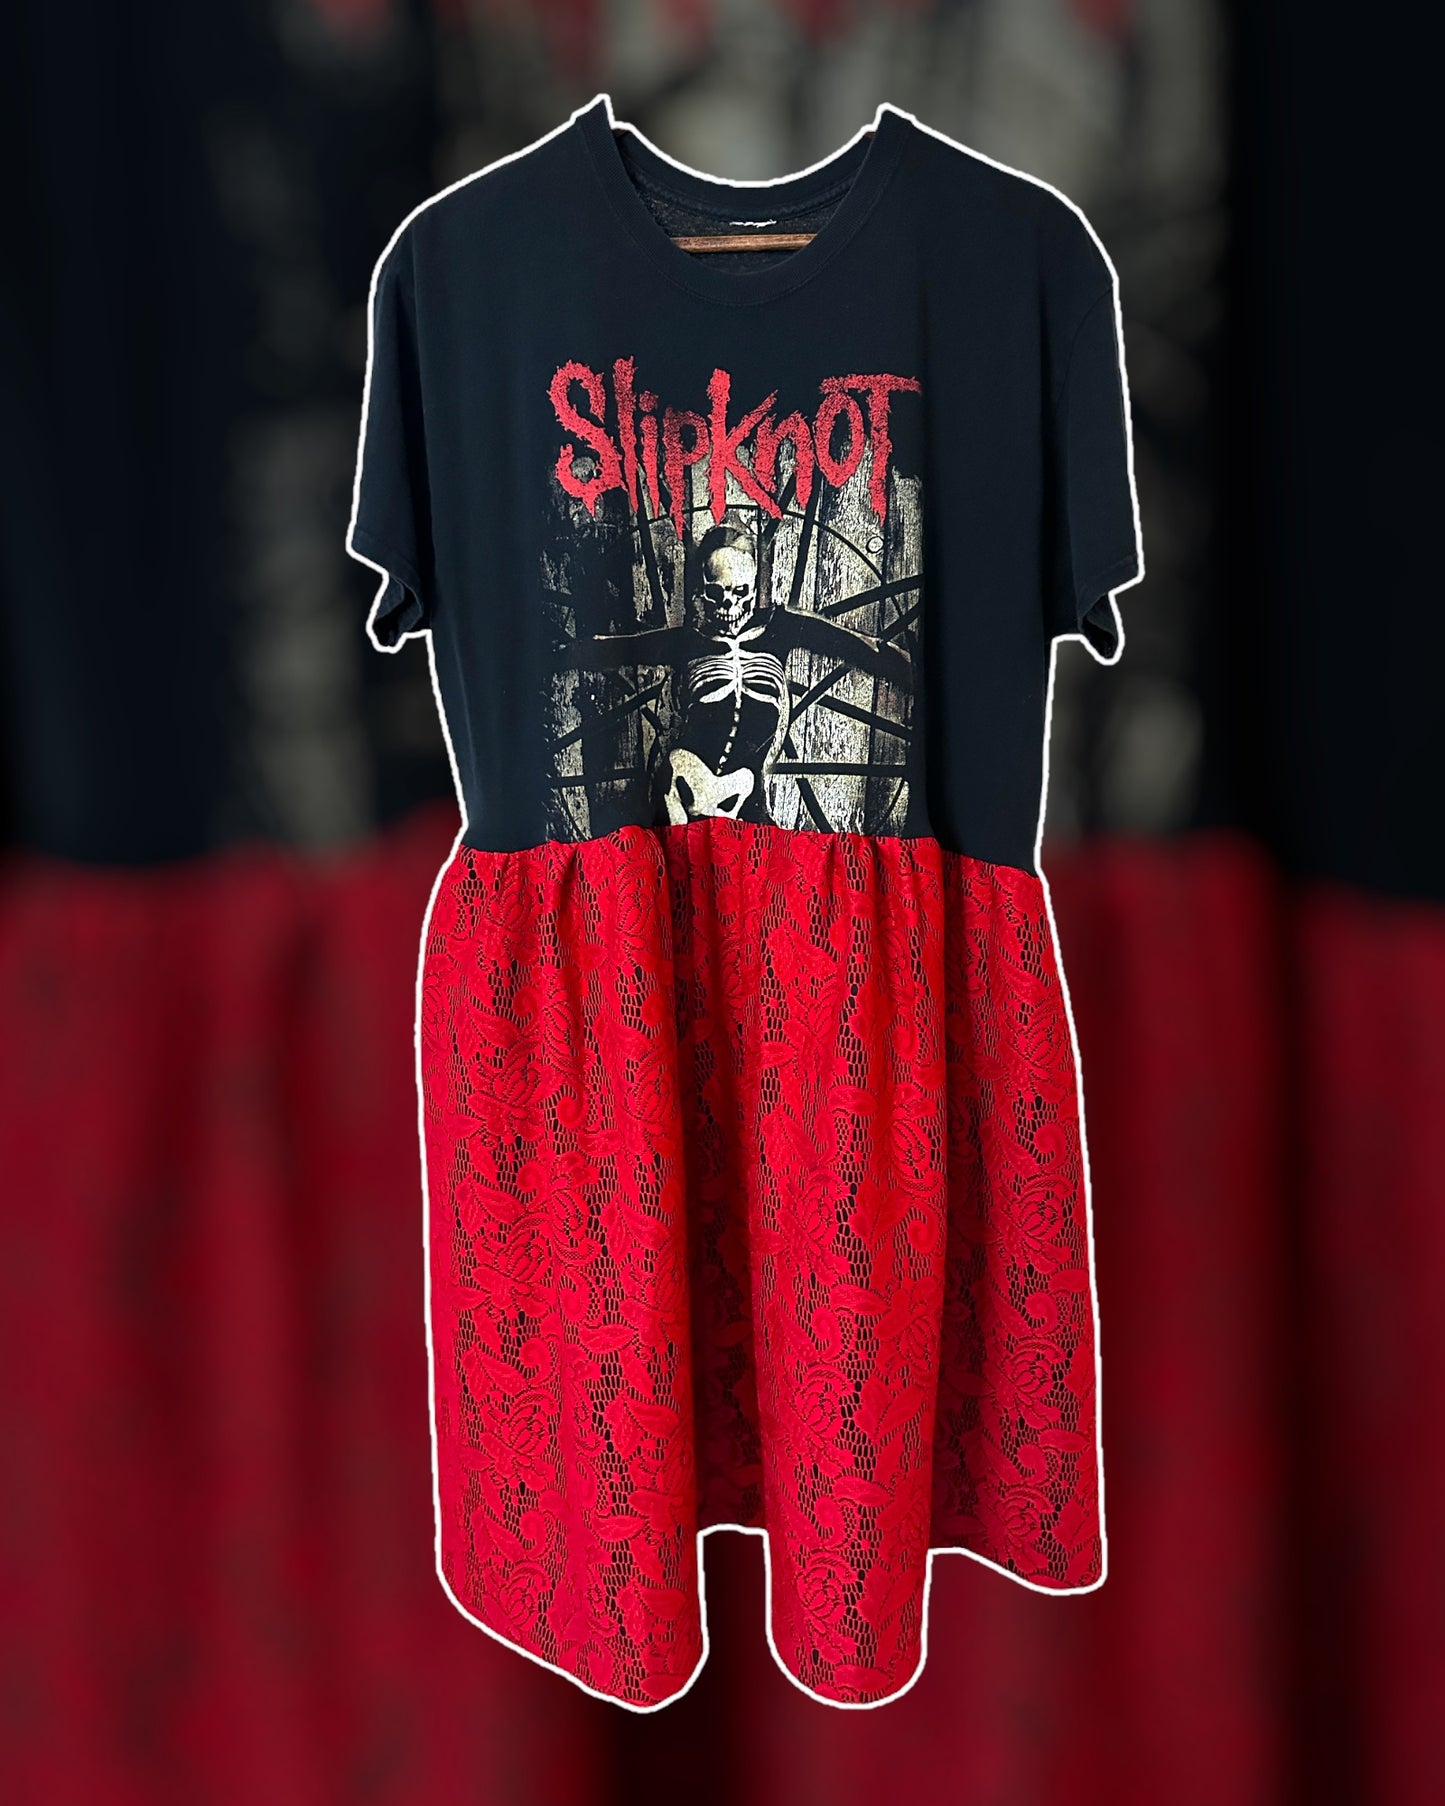 Slipknot Band Tee Dress Size L-XL